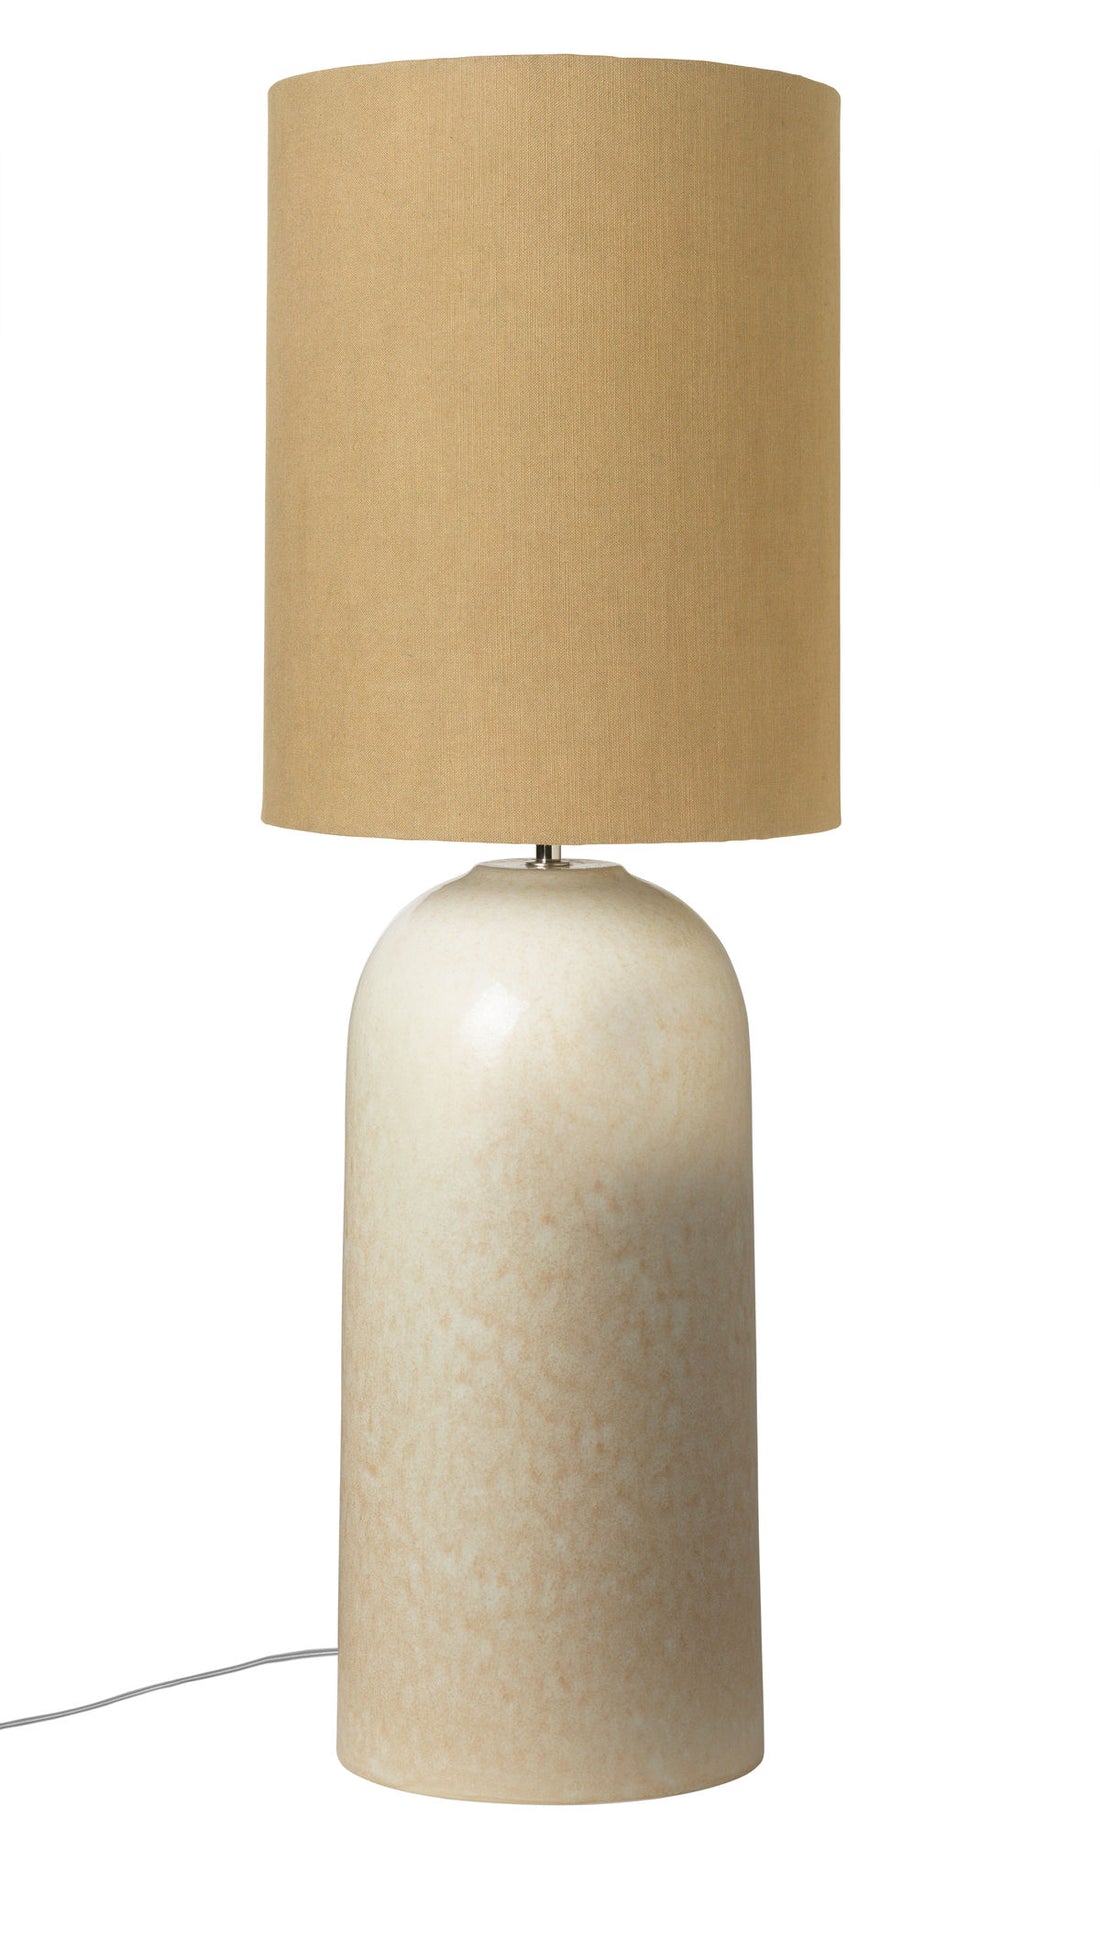 Cozy Living Asla Lamp Base Ceramic - CARAMEL